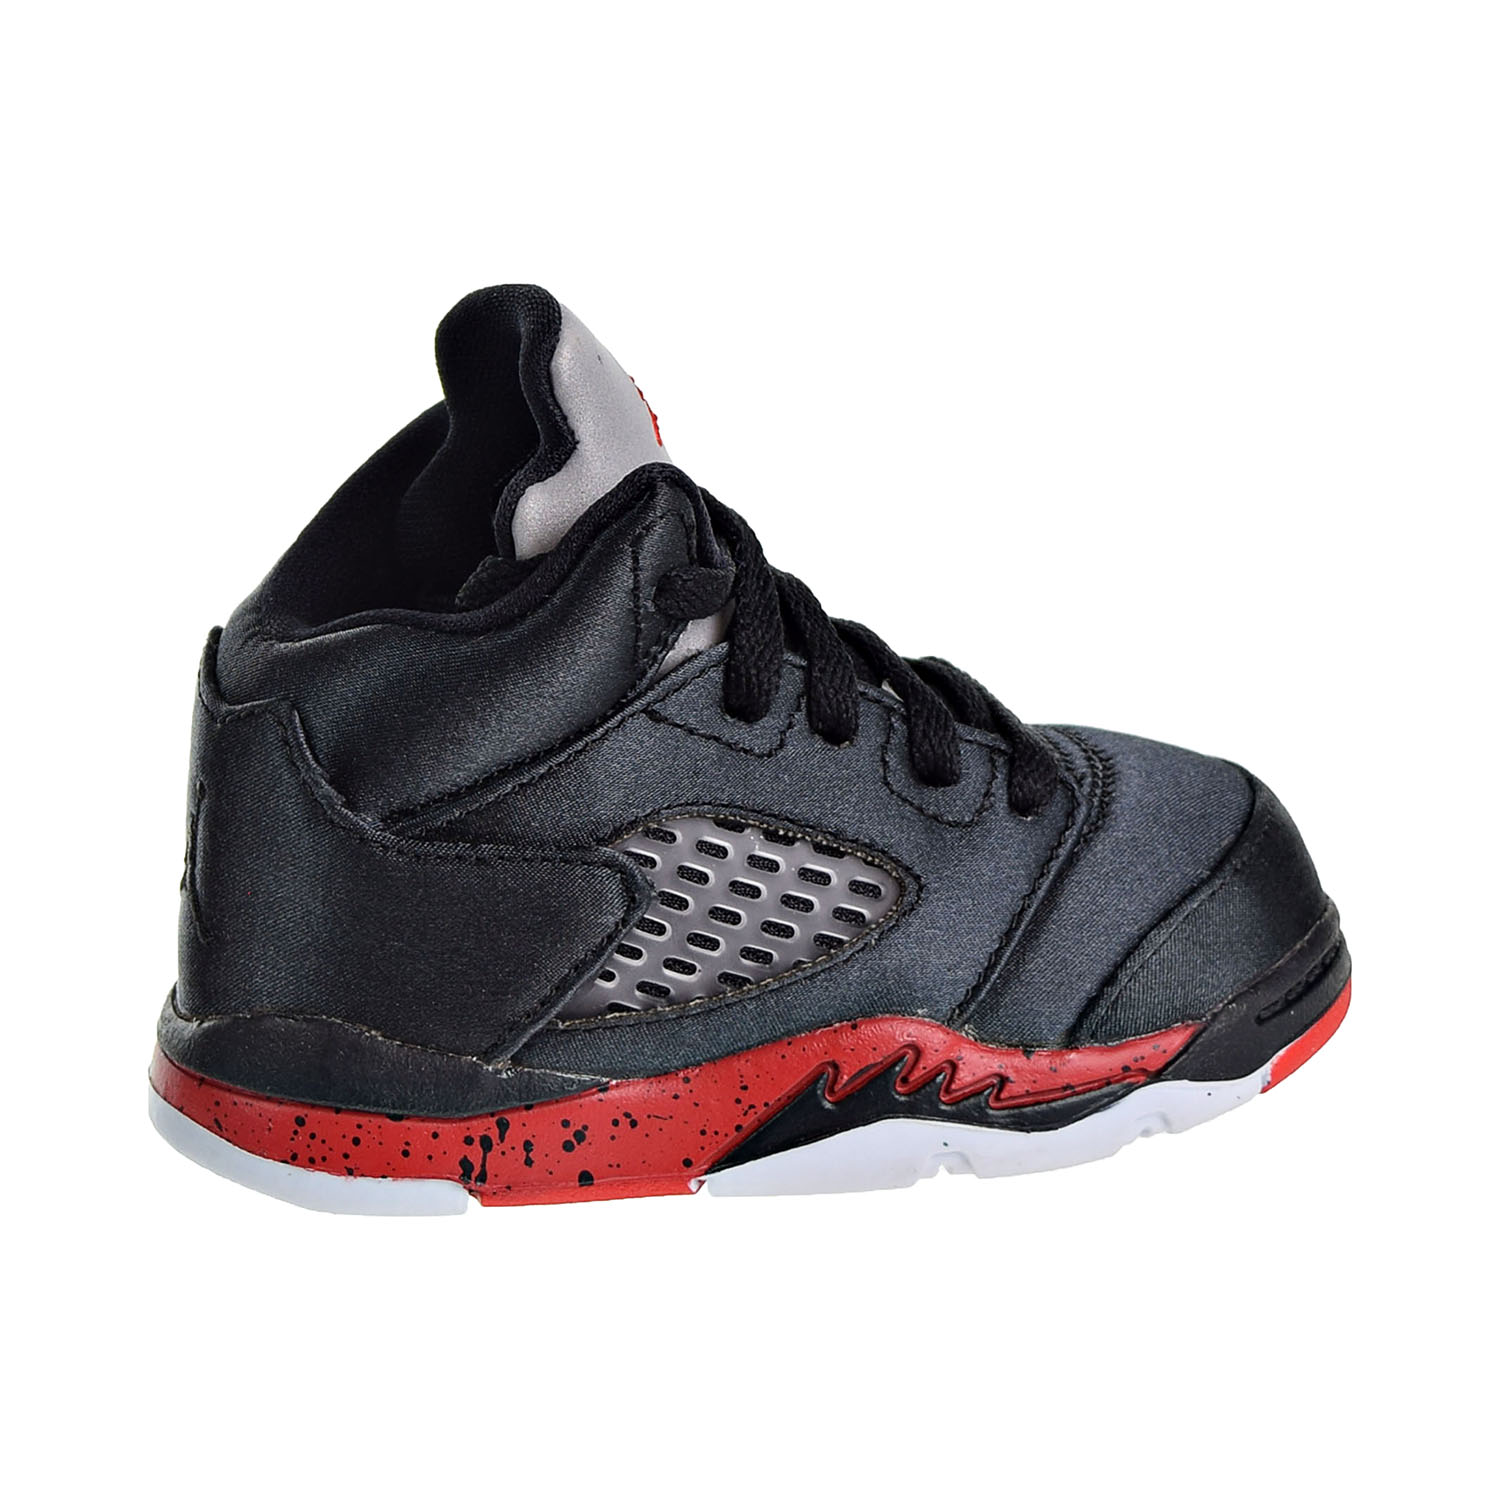 Jordan 5 Retro TD Toddlers Shoes Black 